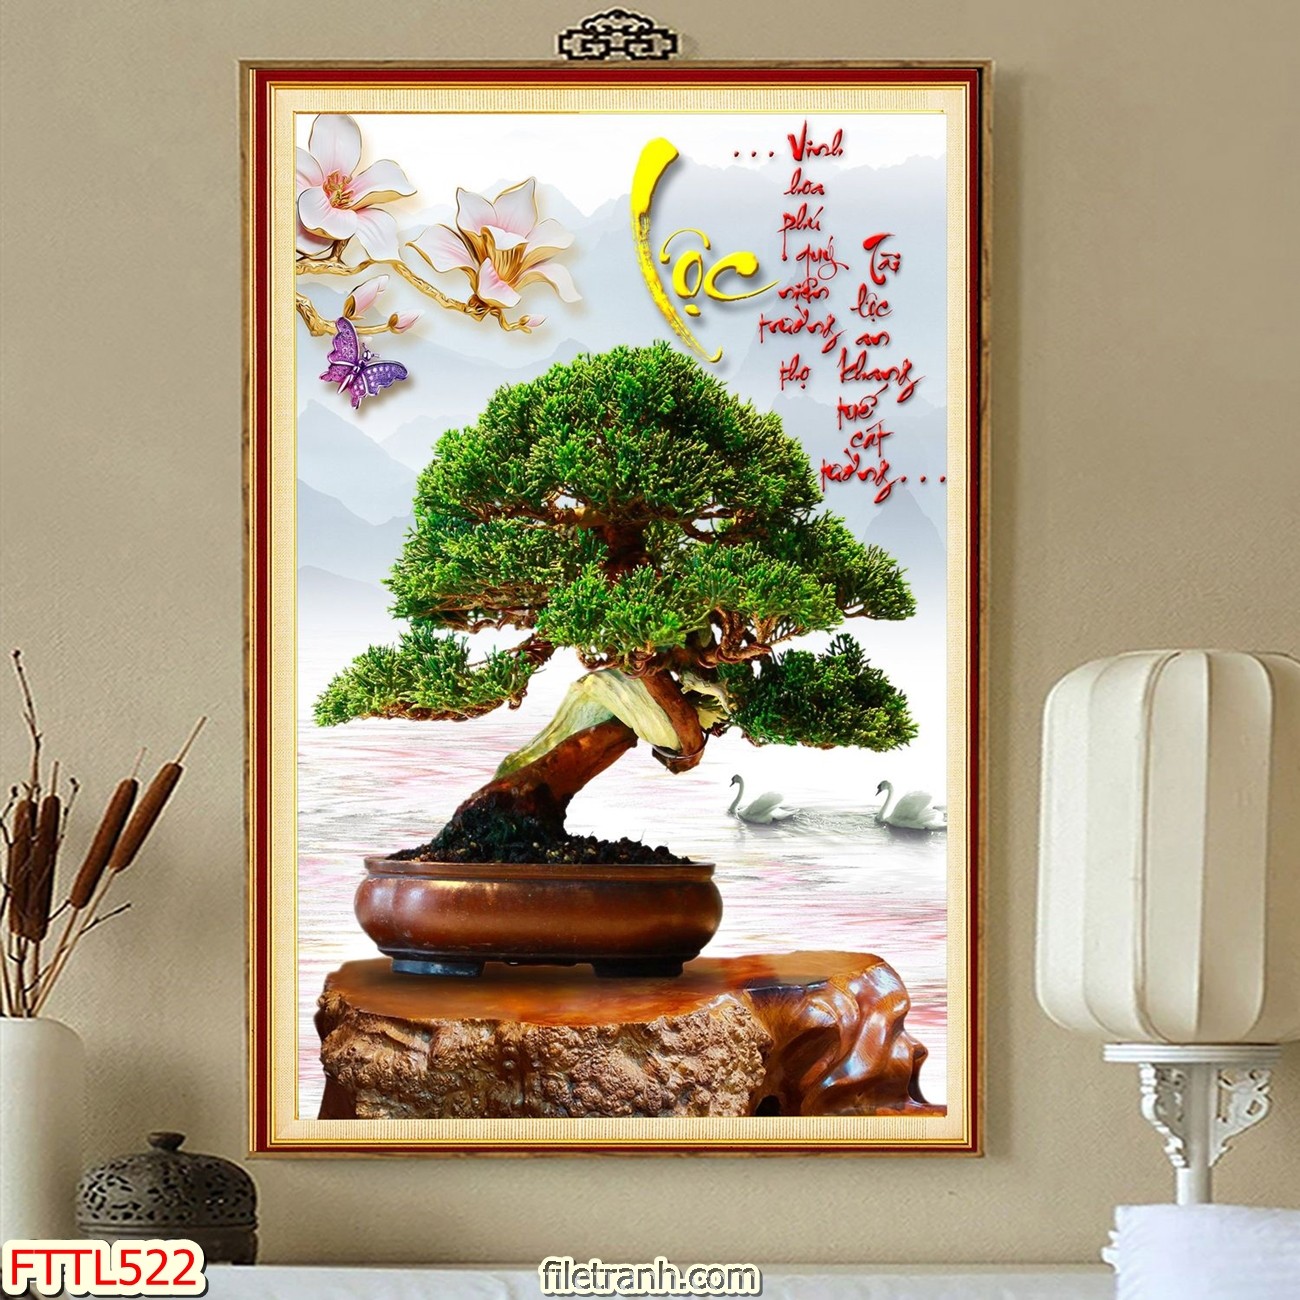 https://filetranh.com/file-tranh-chau-mai-bonsai/file-tranh-chau-mai-bonsai-fttl522.html